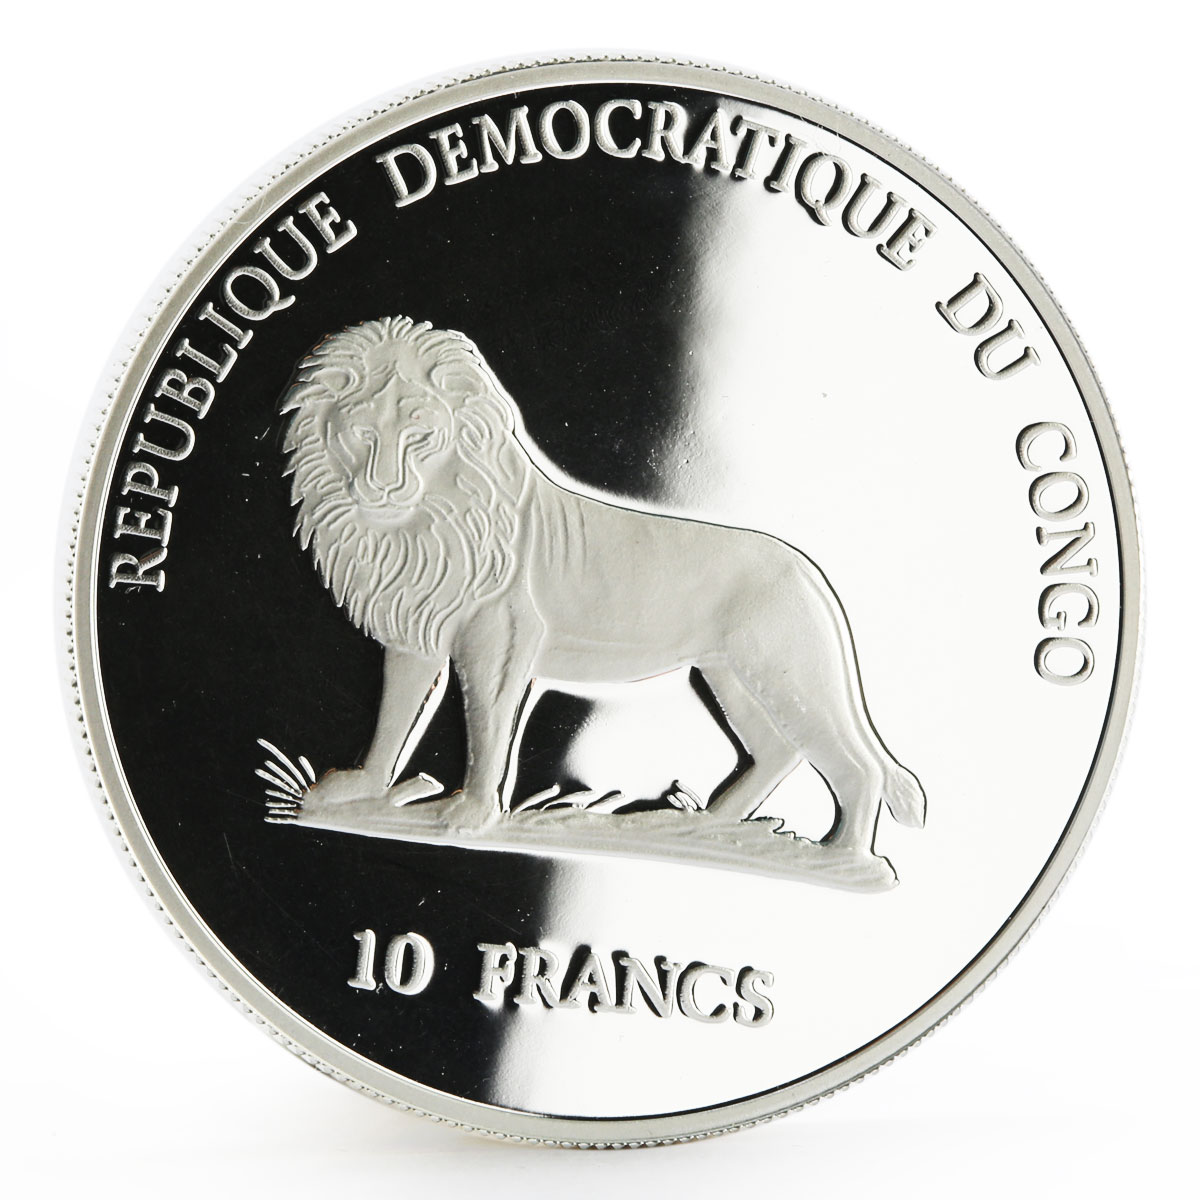 Congo 10 francs Panama Canal series Sailing Ship proof silver coin 2000